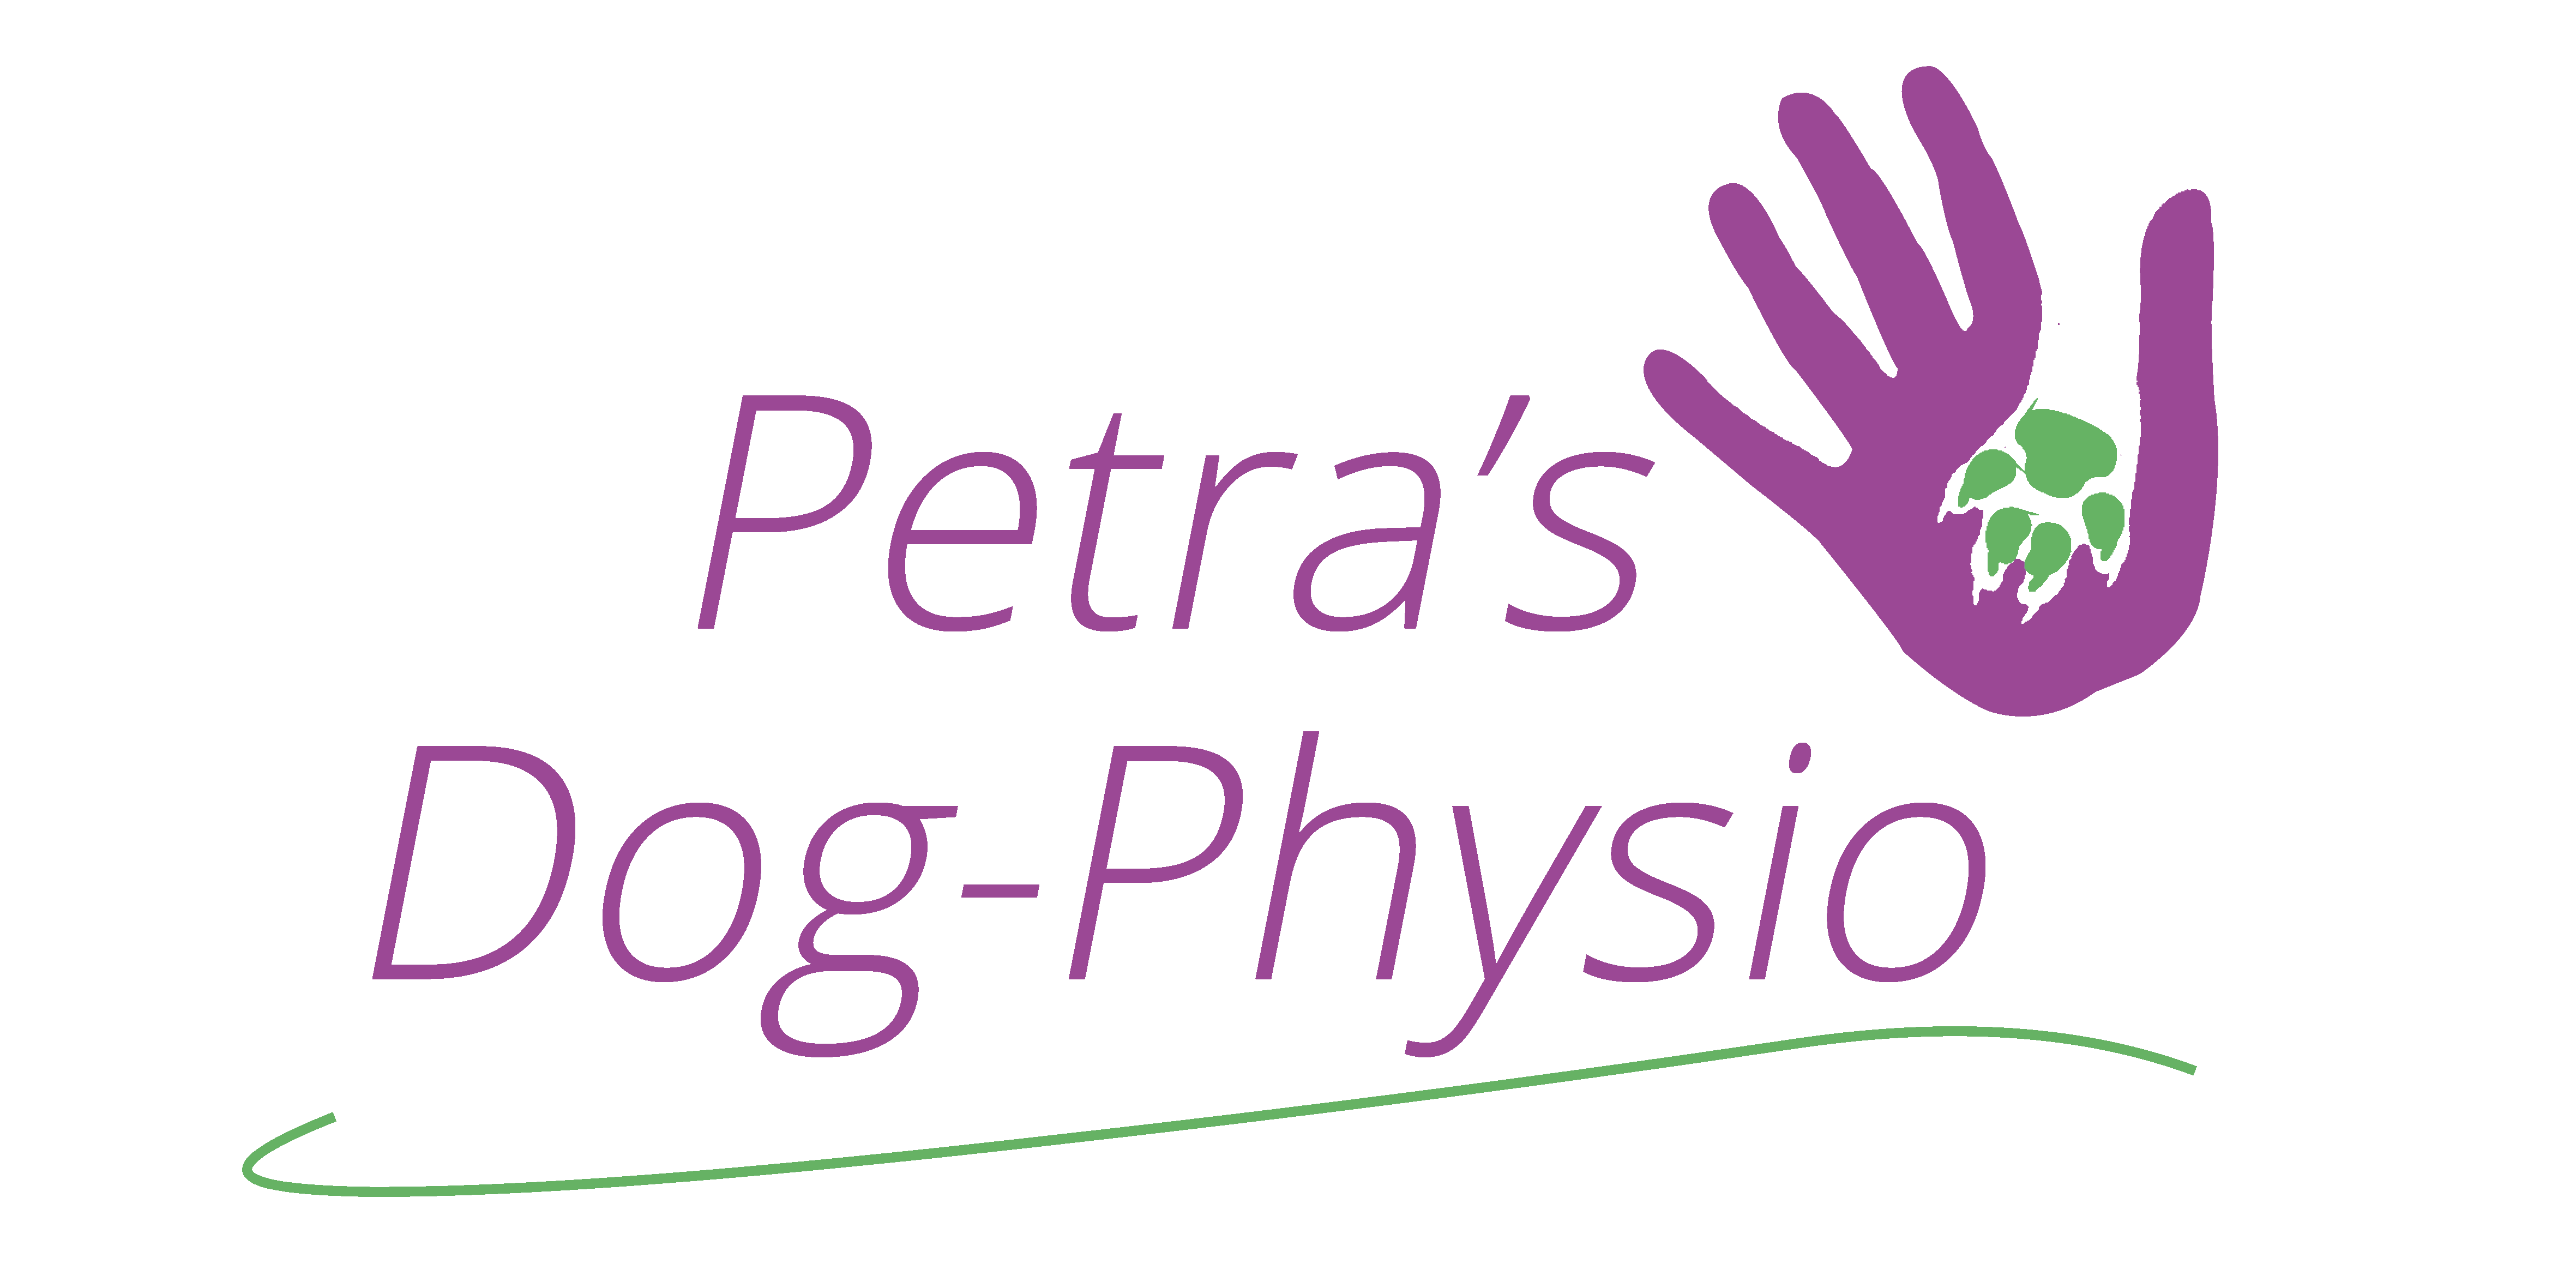 Petra's Dog-Physio